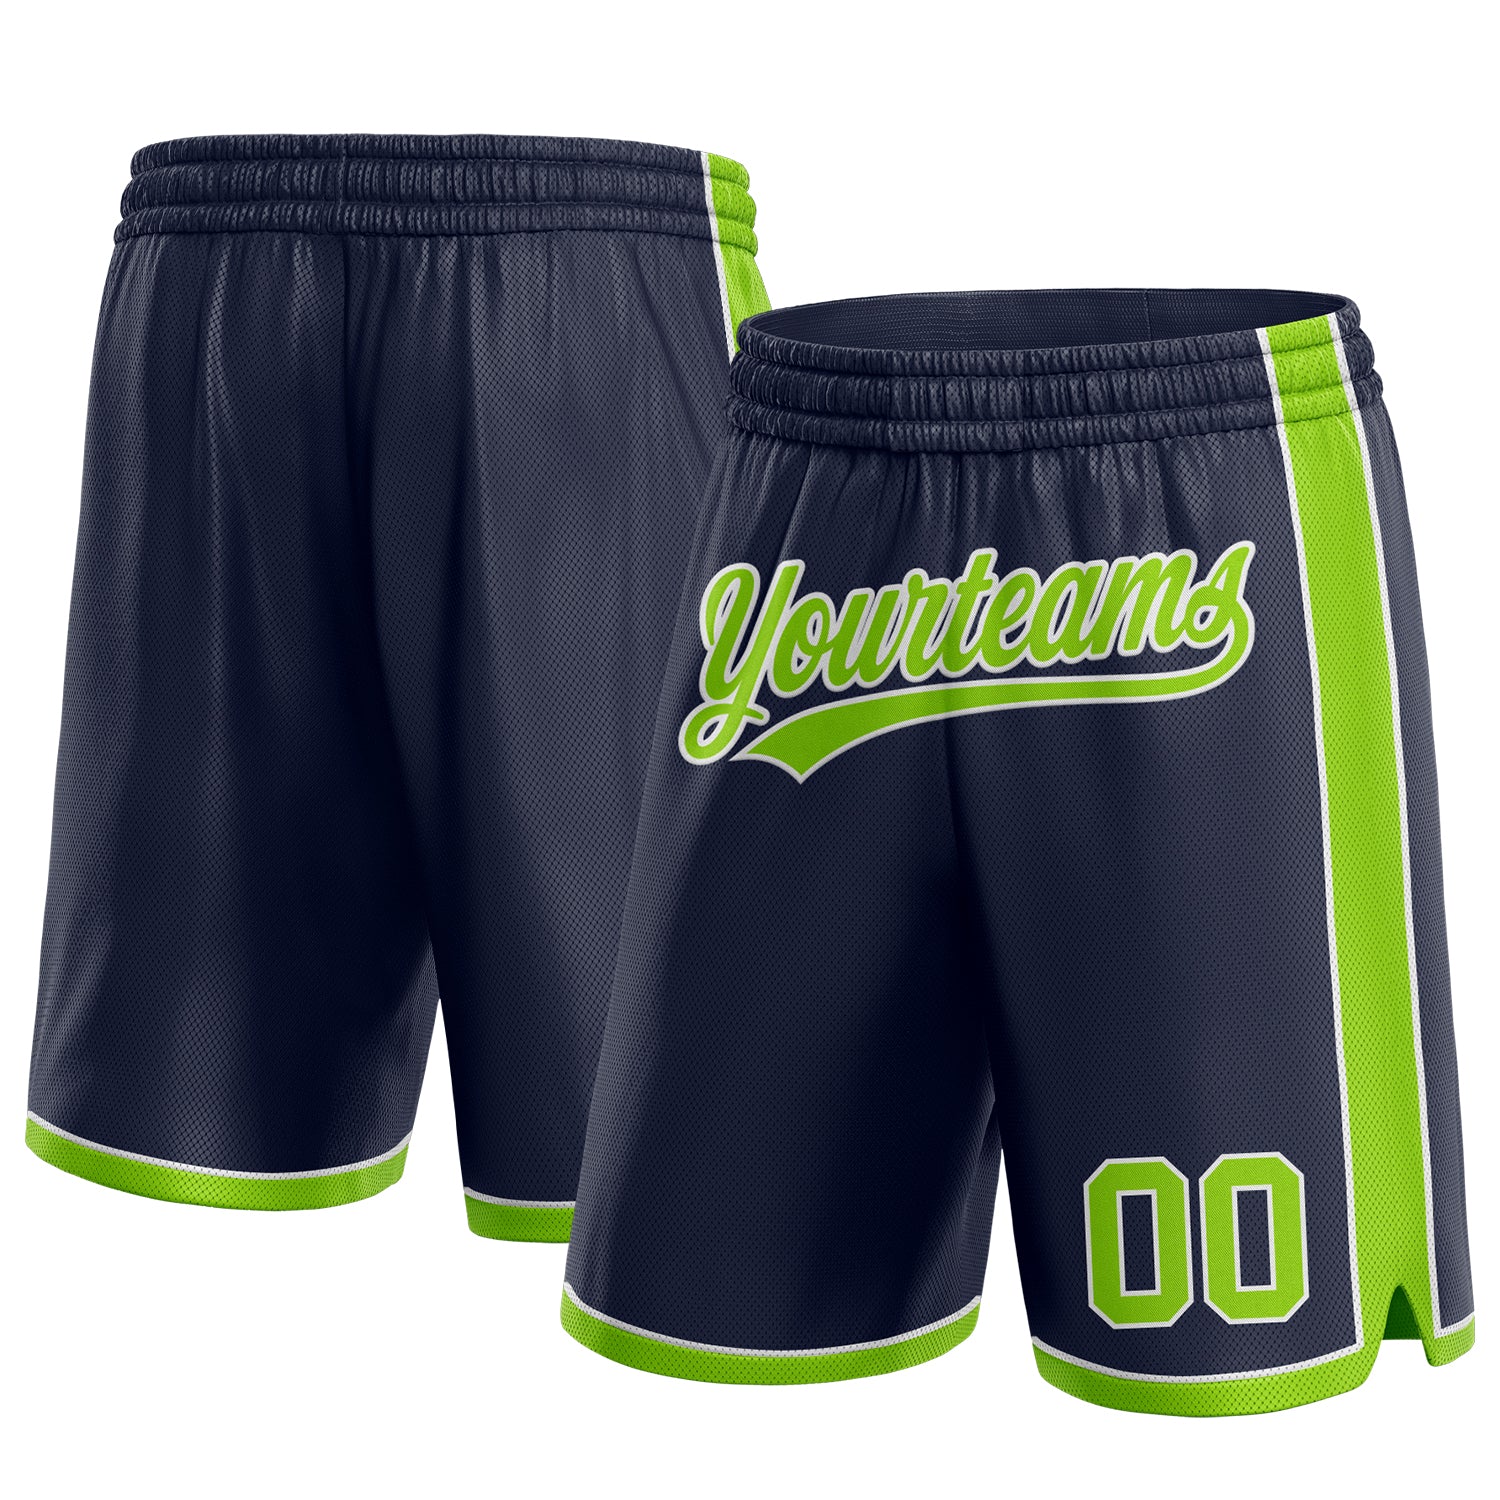 V-Neck Polyester Dry Fit Sublimation Basketball Jersey&Shorts